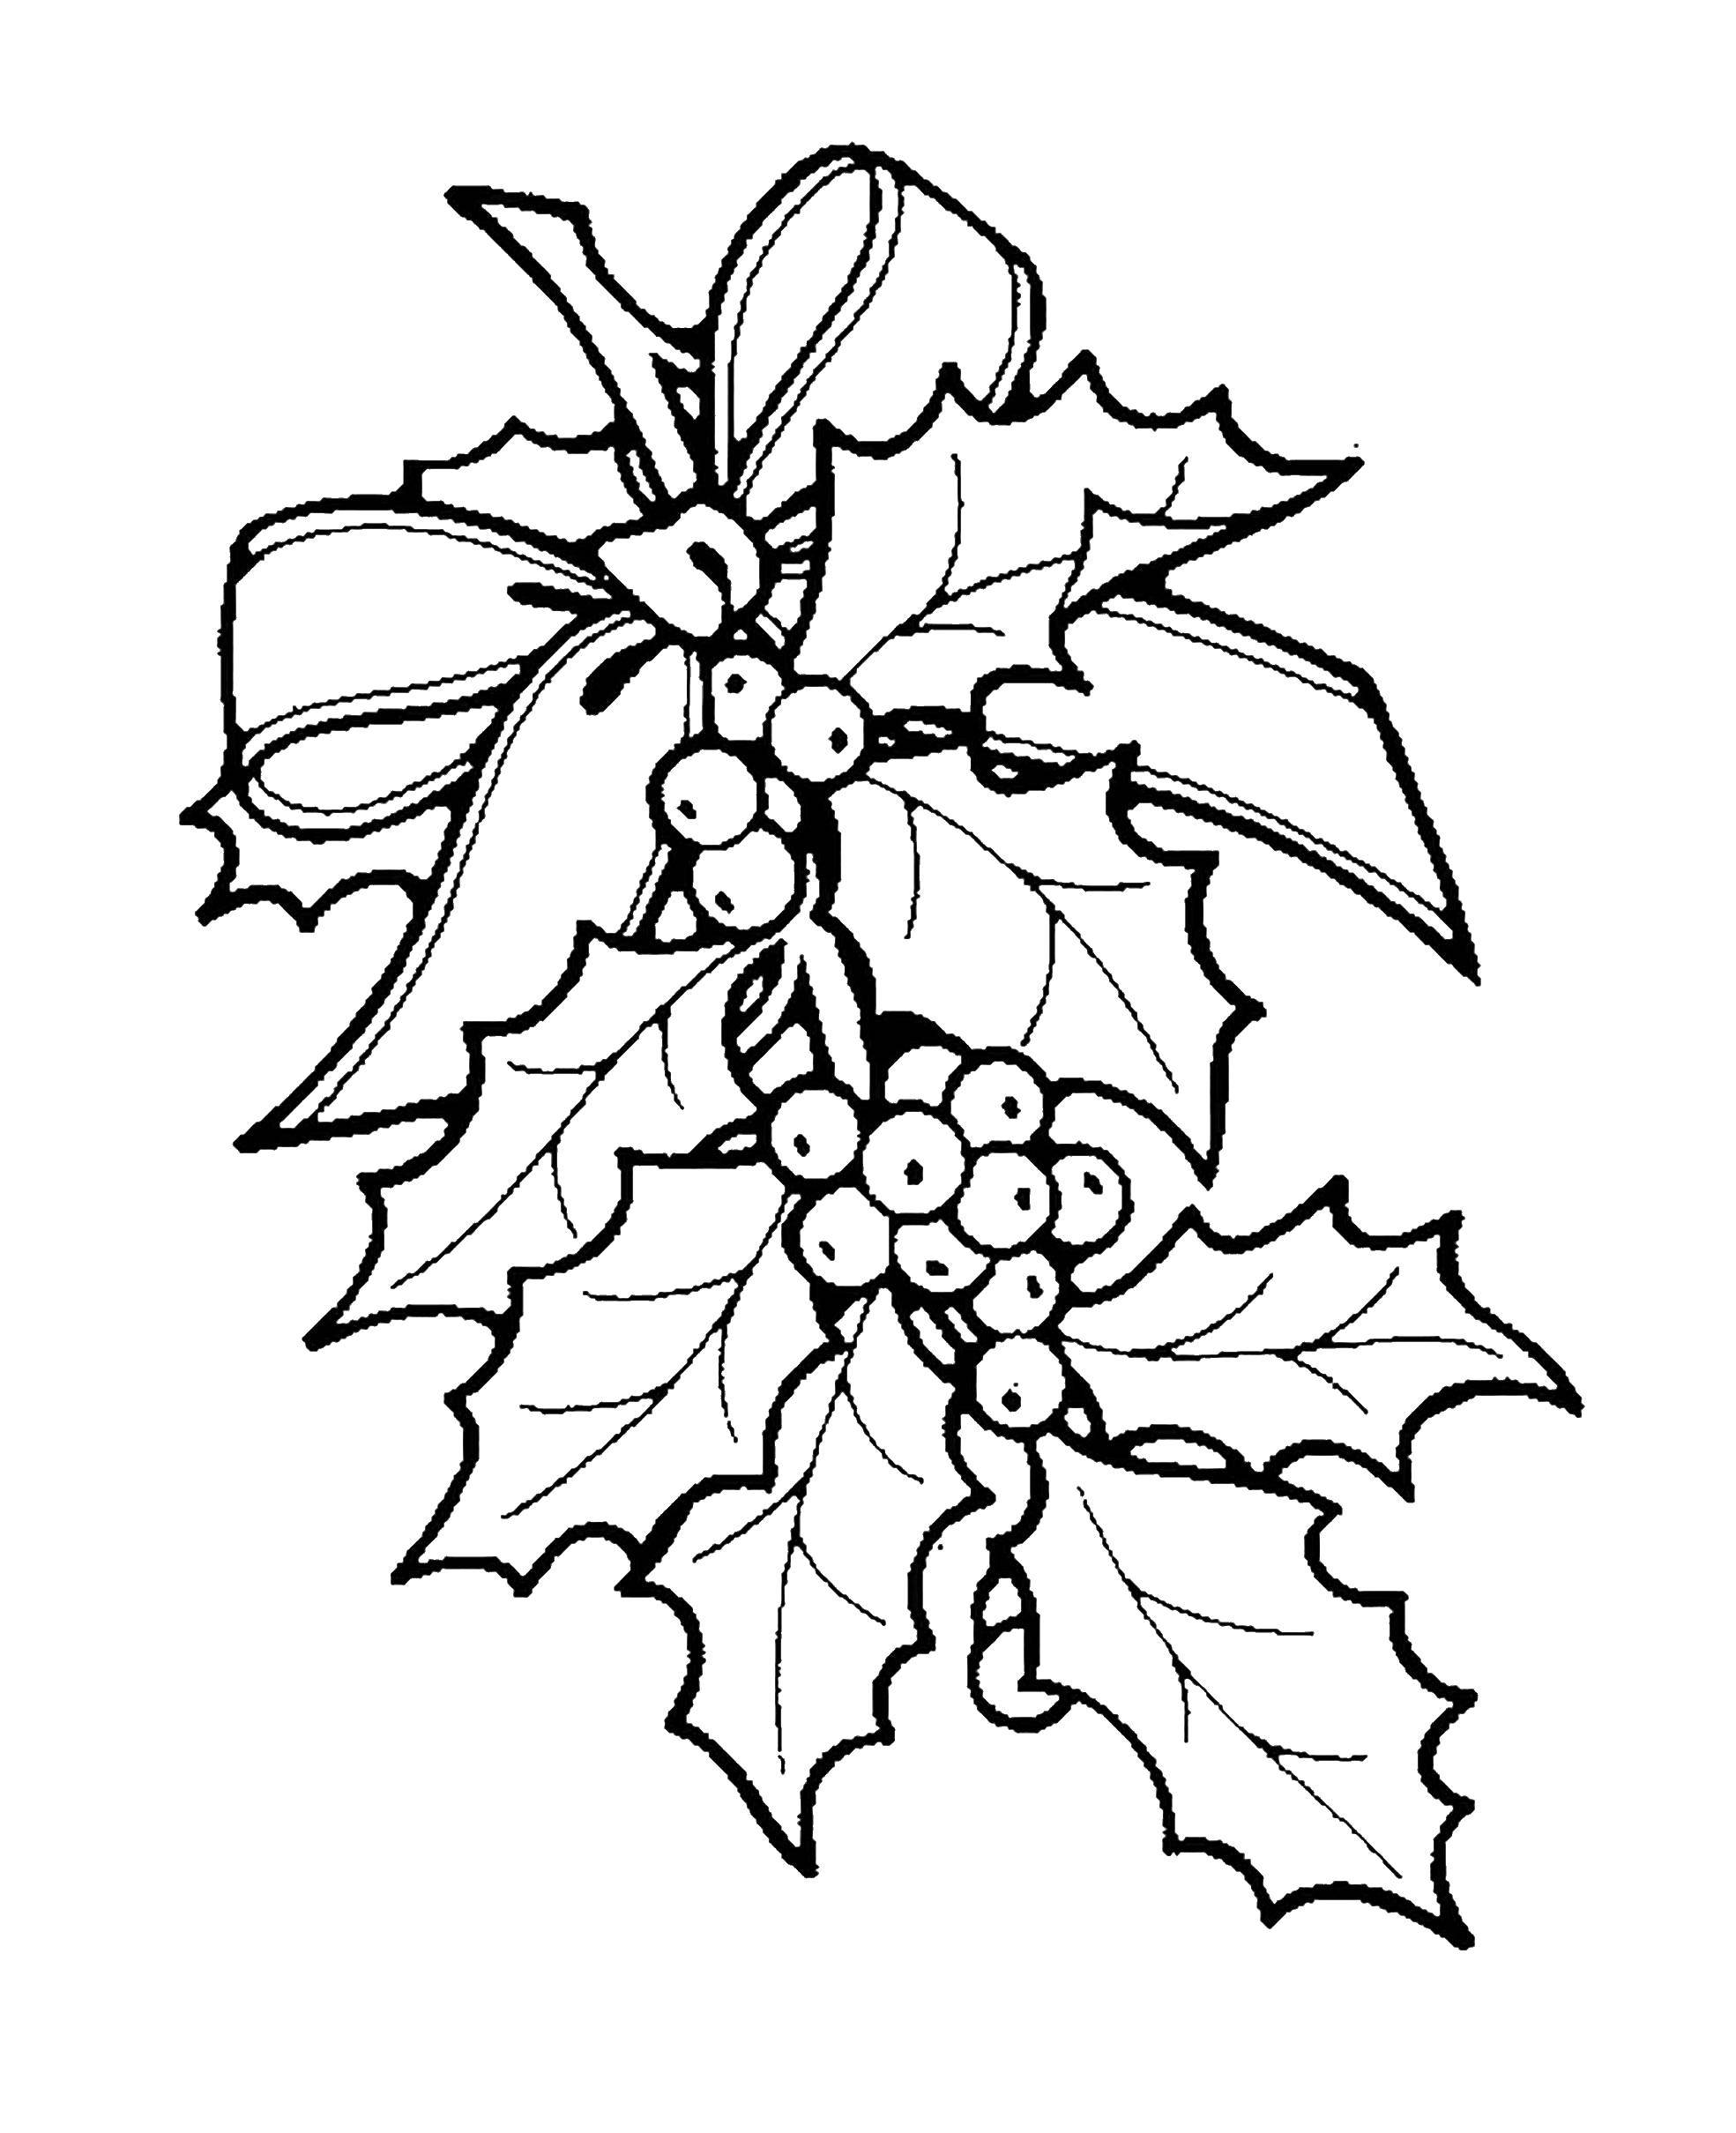 Coloring Mistletoe Christmas. Category new year. Tags:  mistletoe, new year.